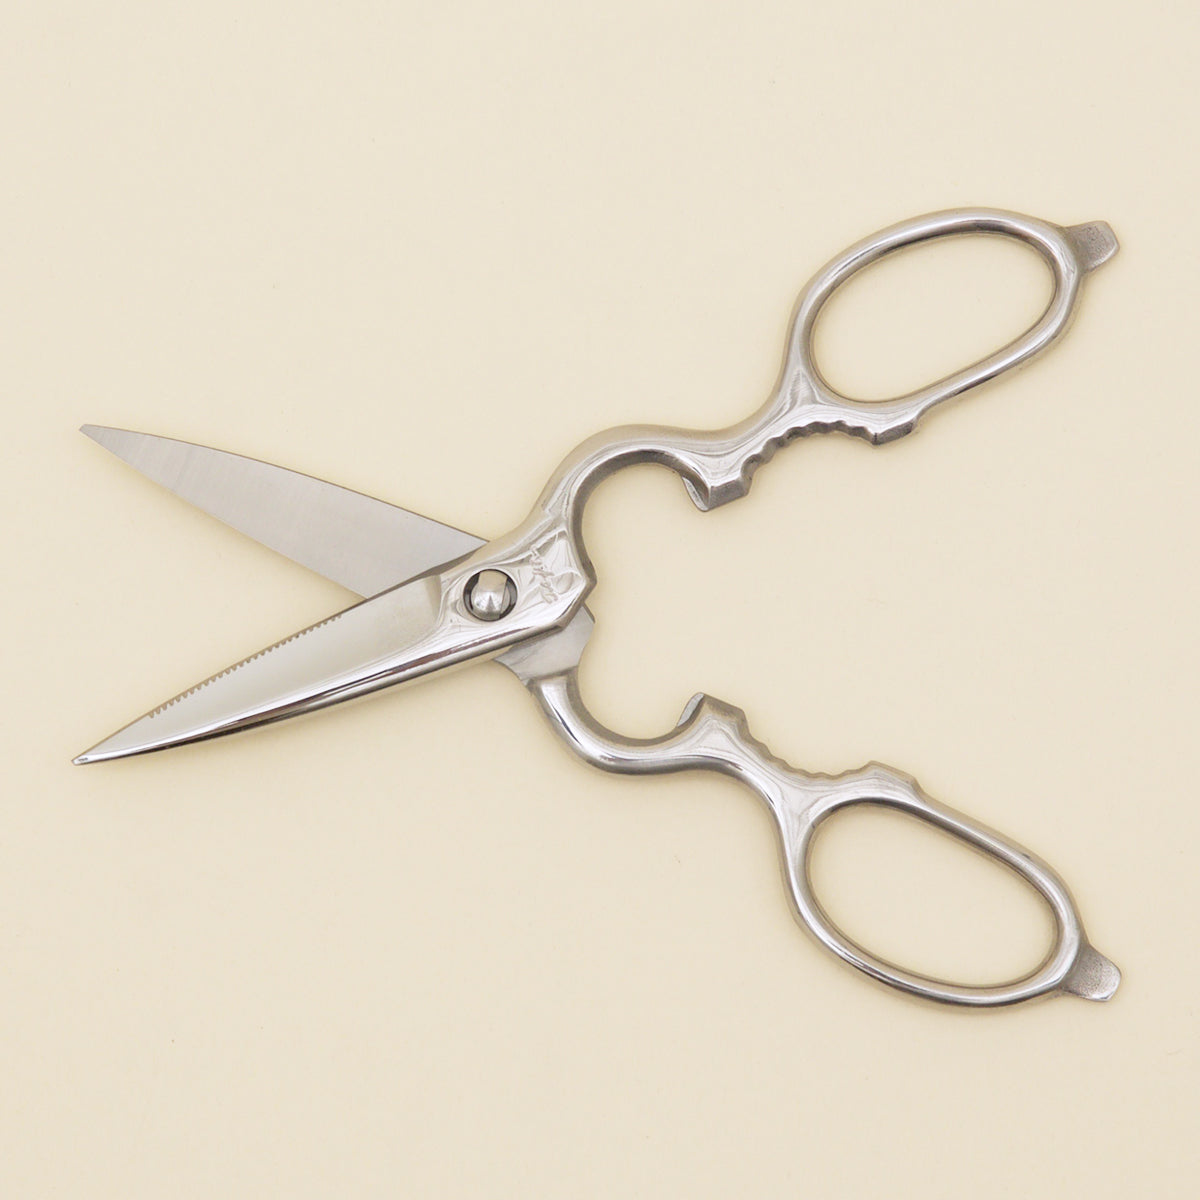 High Quality Scissors